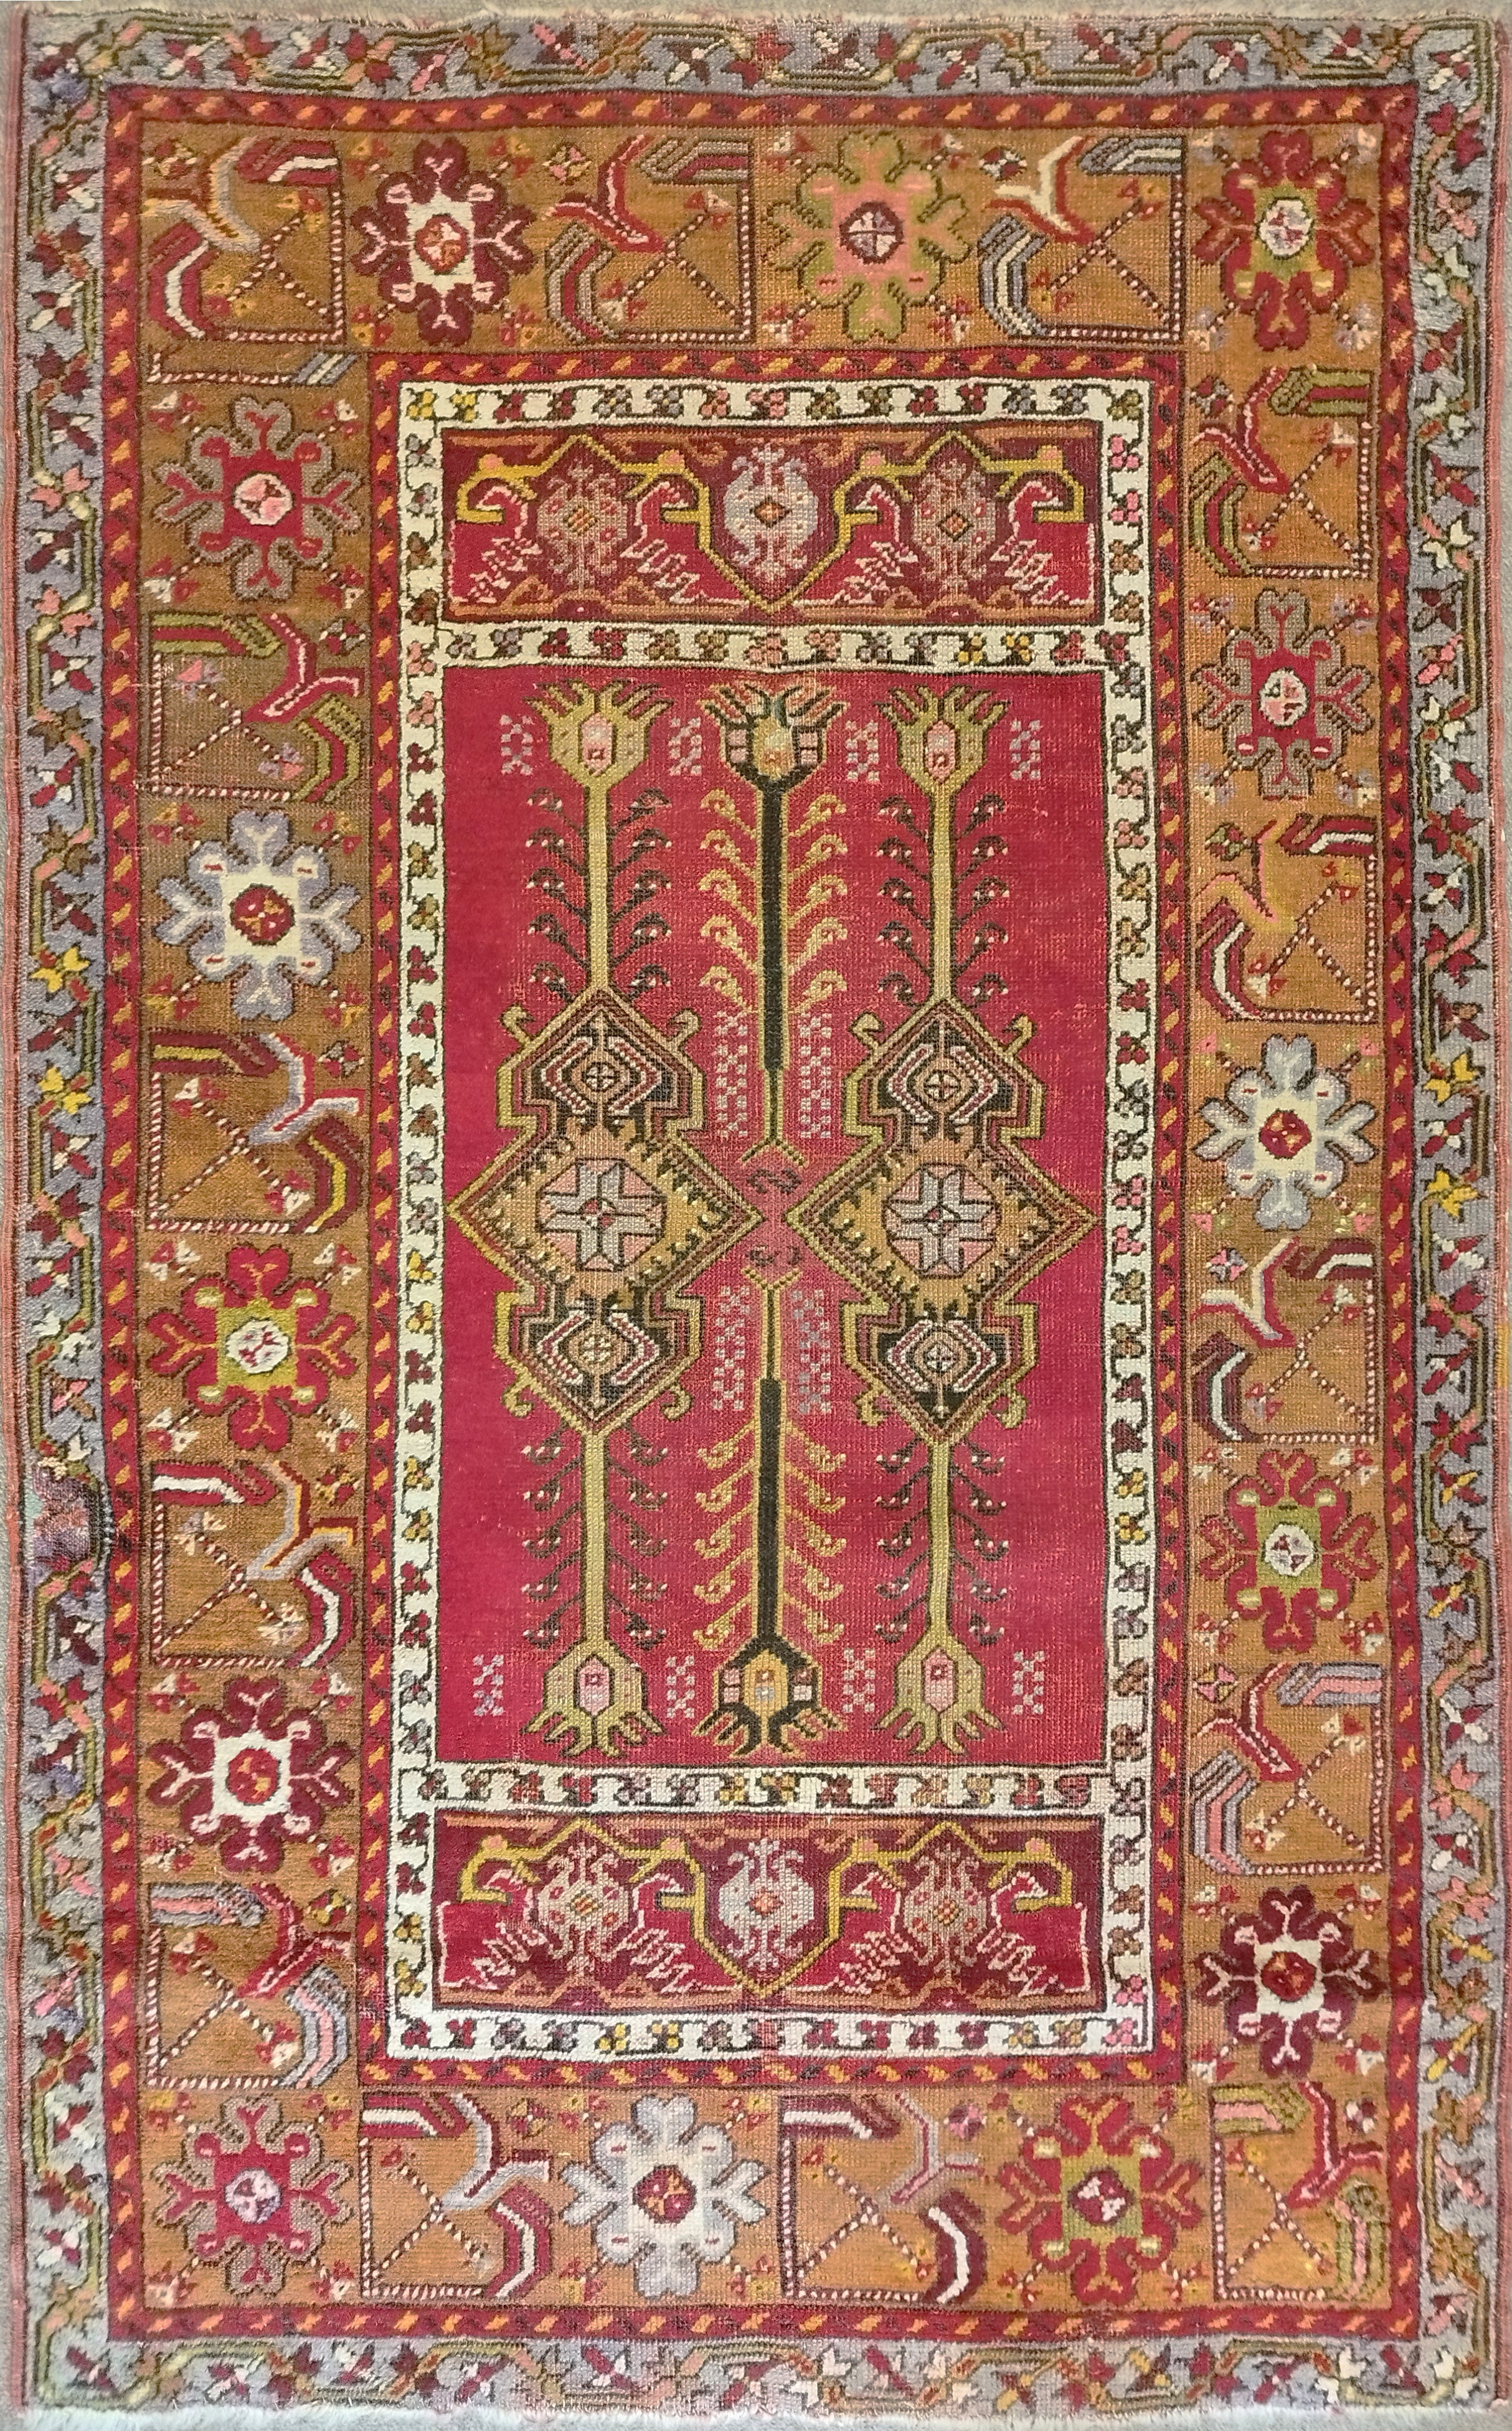  Kirchir Turkish Carpet, 19th Century - N° 728 For Sale